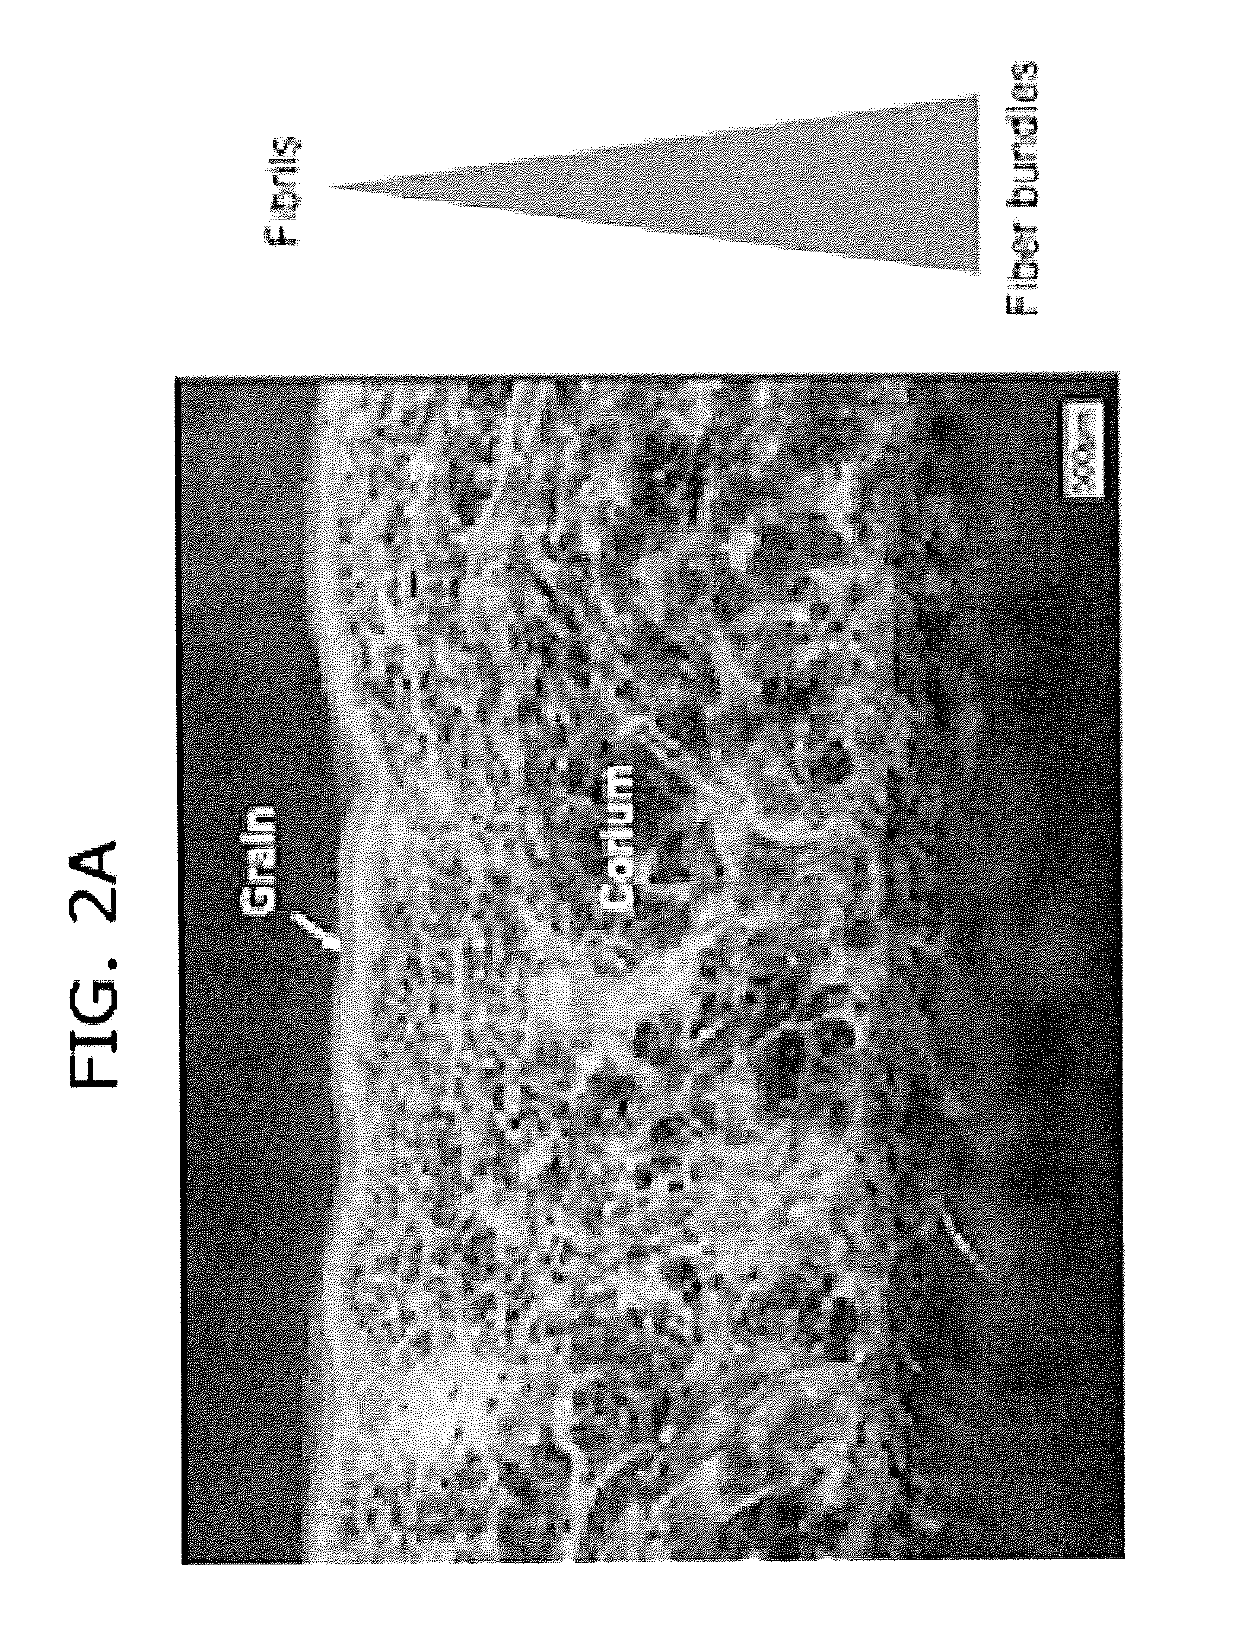 Biofabricated material containing collagen fibrils